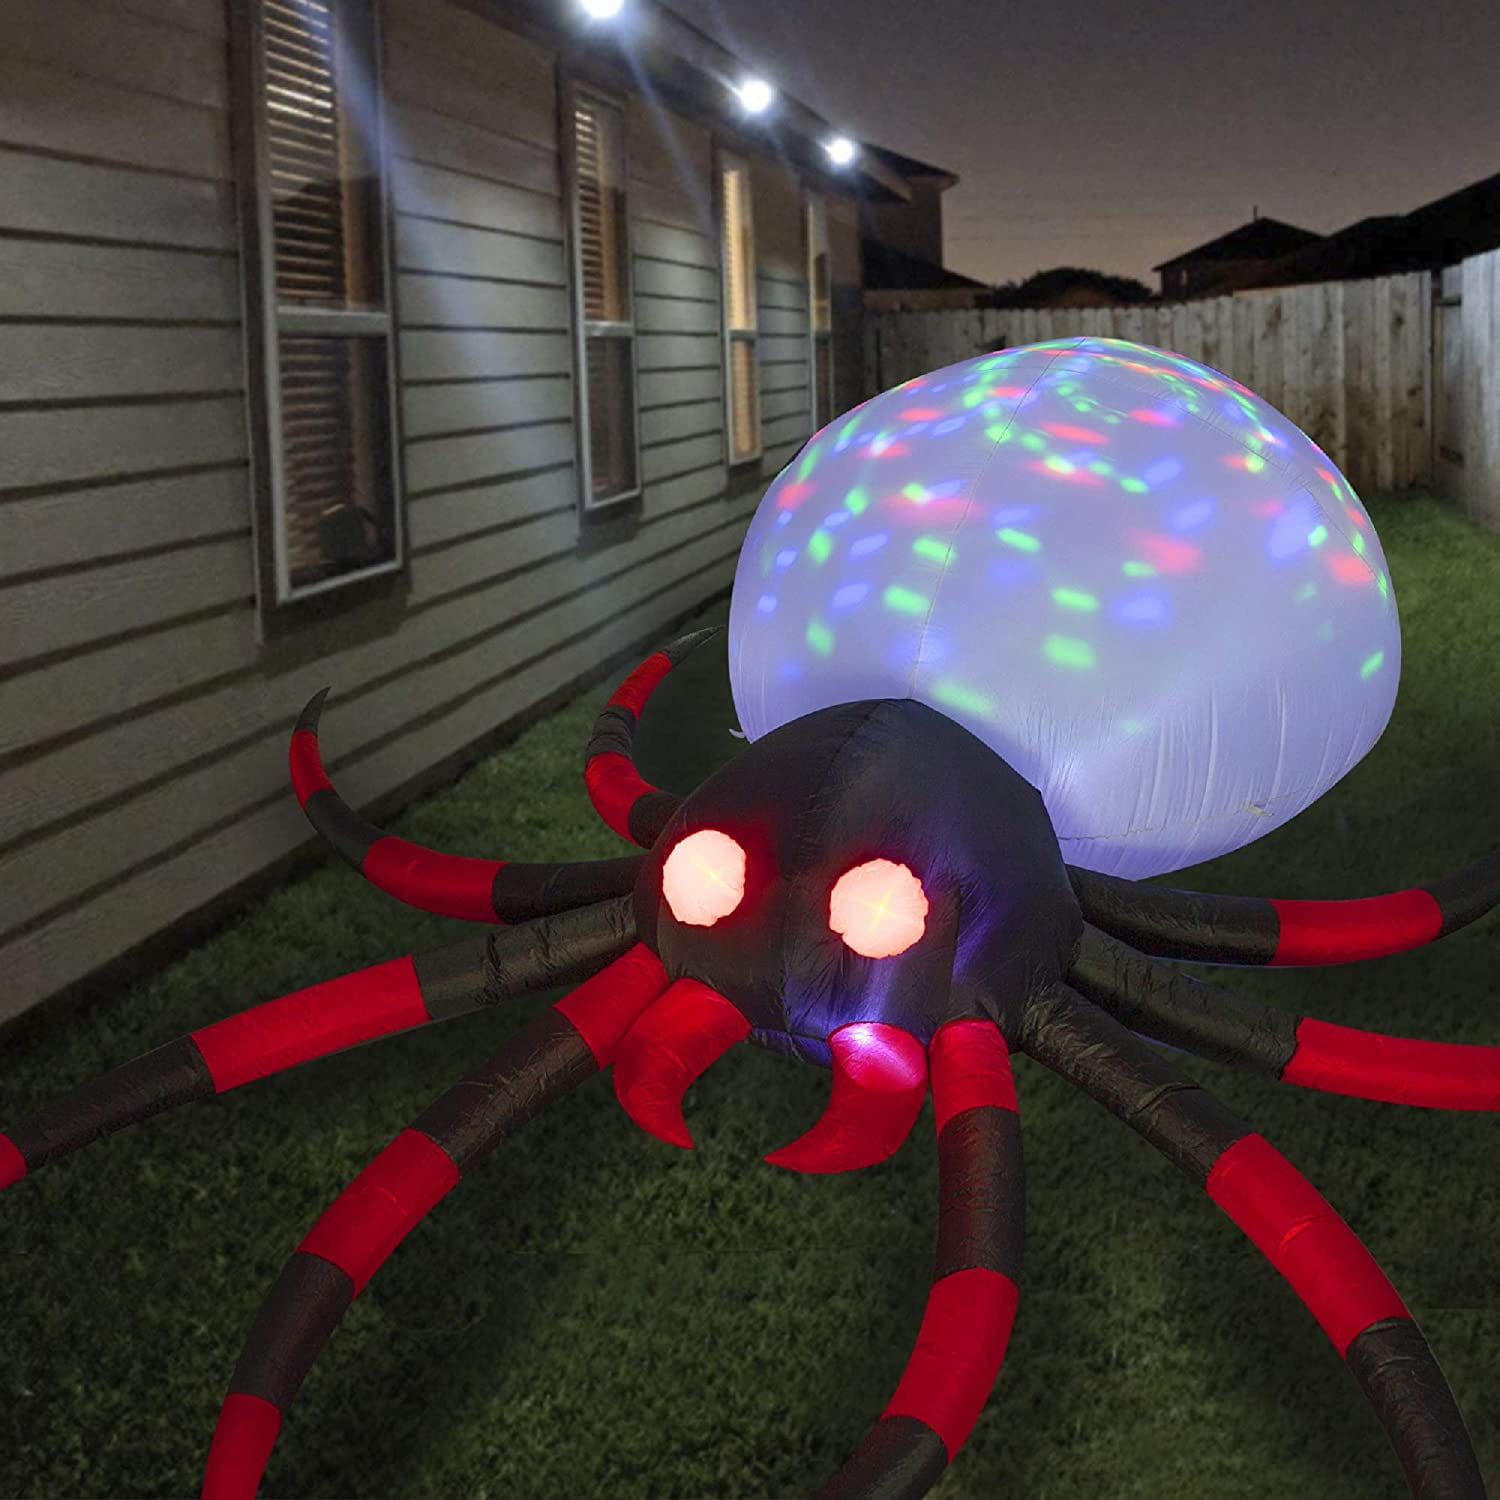 12 FT Halloween Inflatables Giant Red Spider Outdoor Halloween